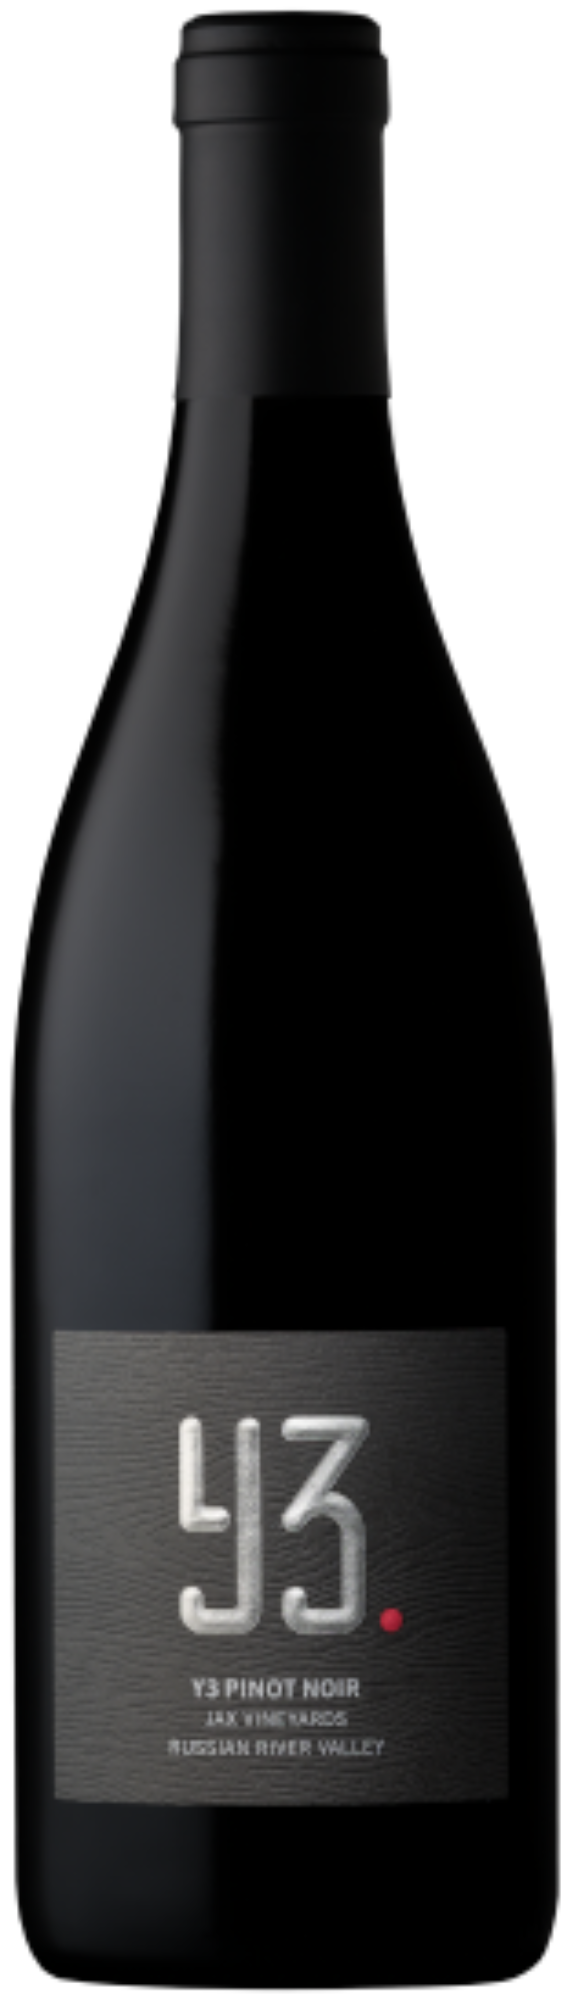 Jax Y3 Pinot Noir 2021